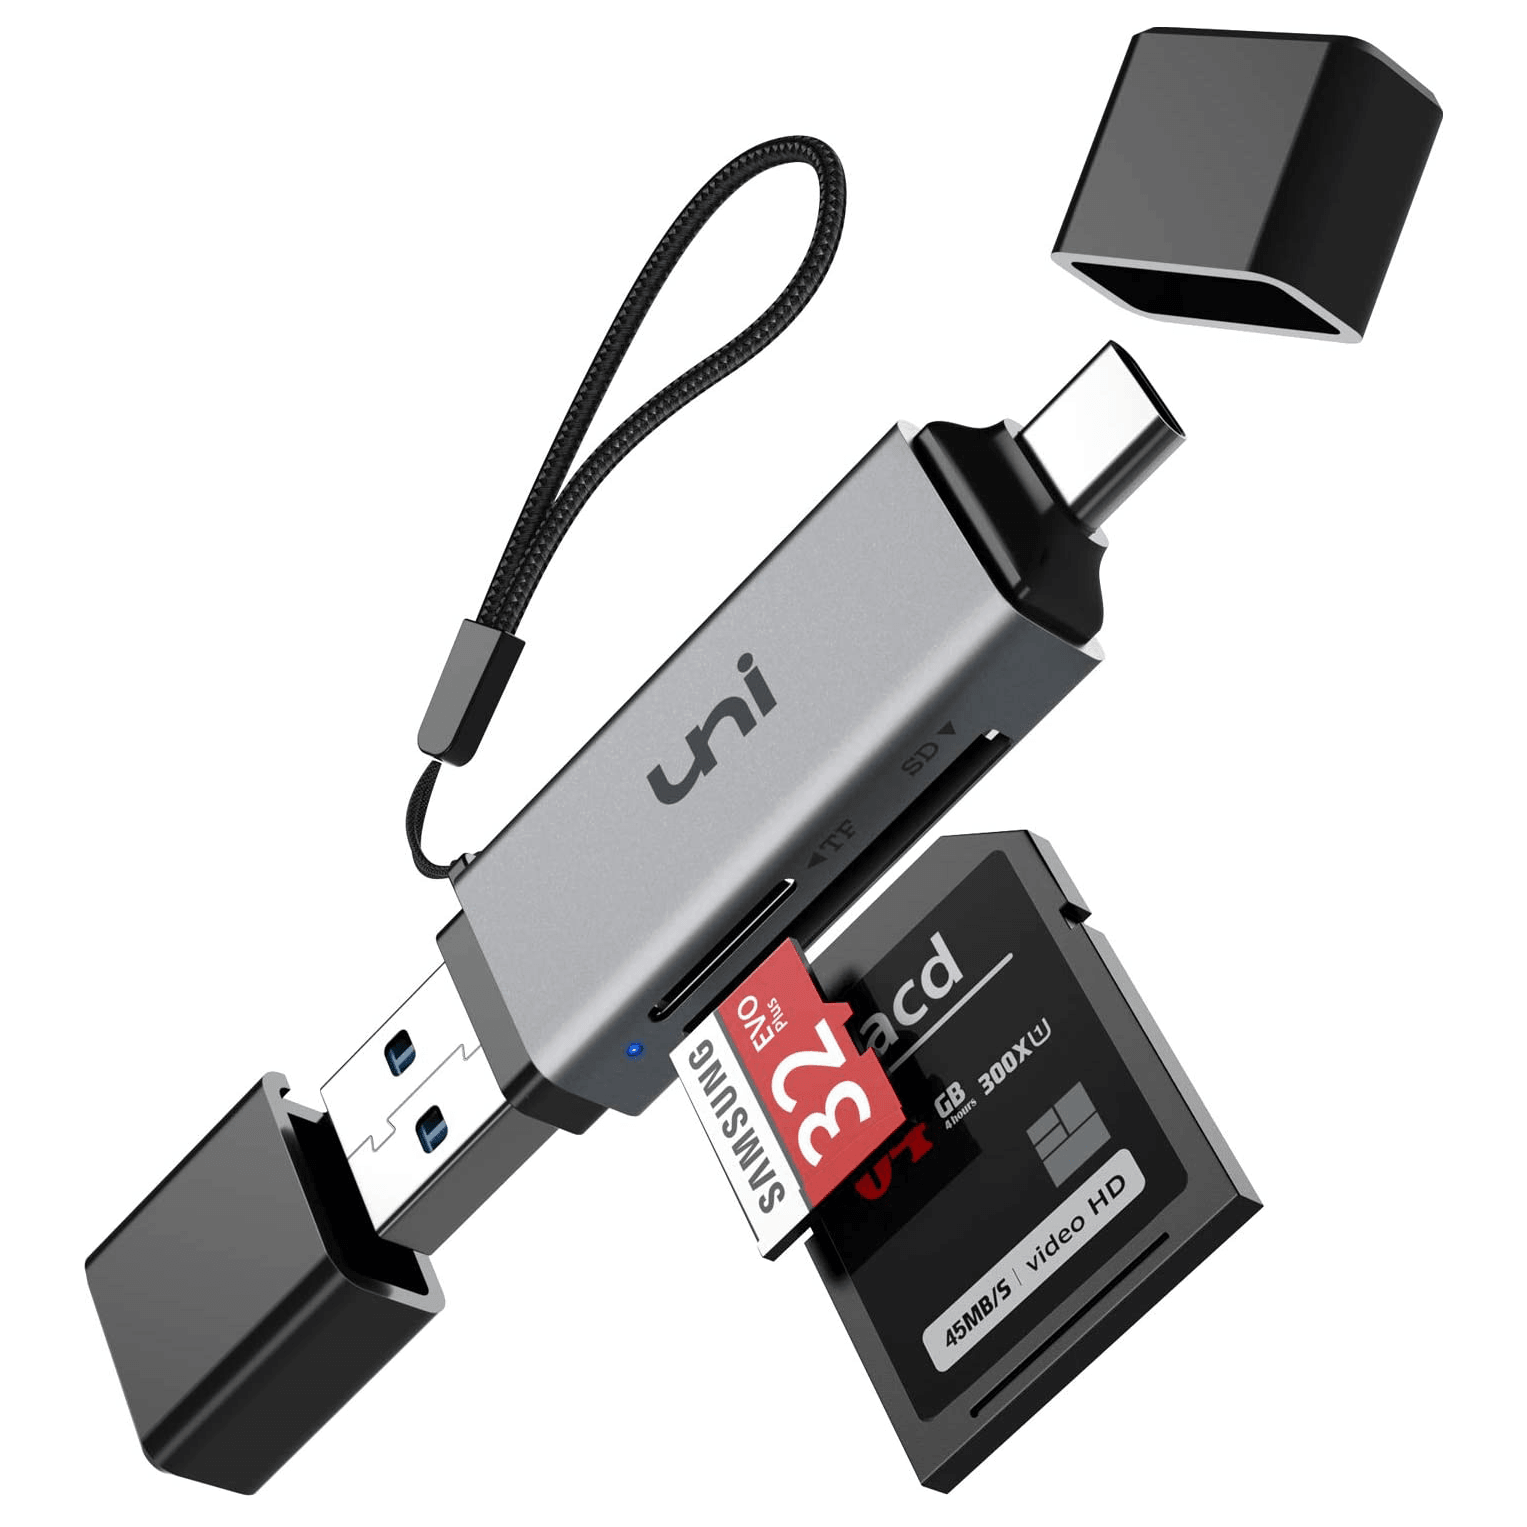 Spaans Welsprekend trechter USB & USB-C SD/MicroSD Dual Card Reader SD Card Adapter, UHS-I | uni®